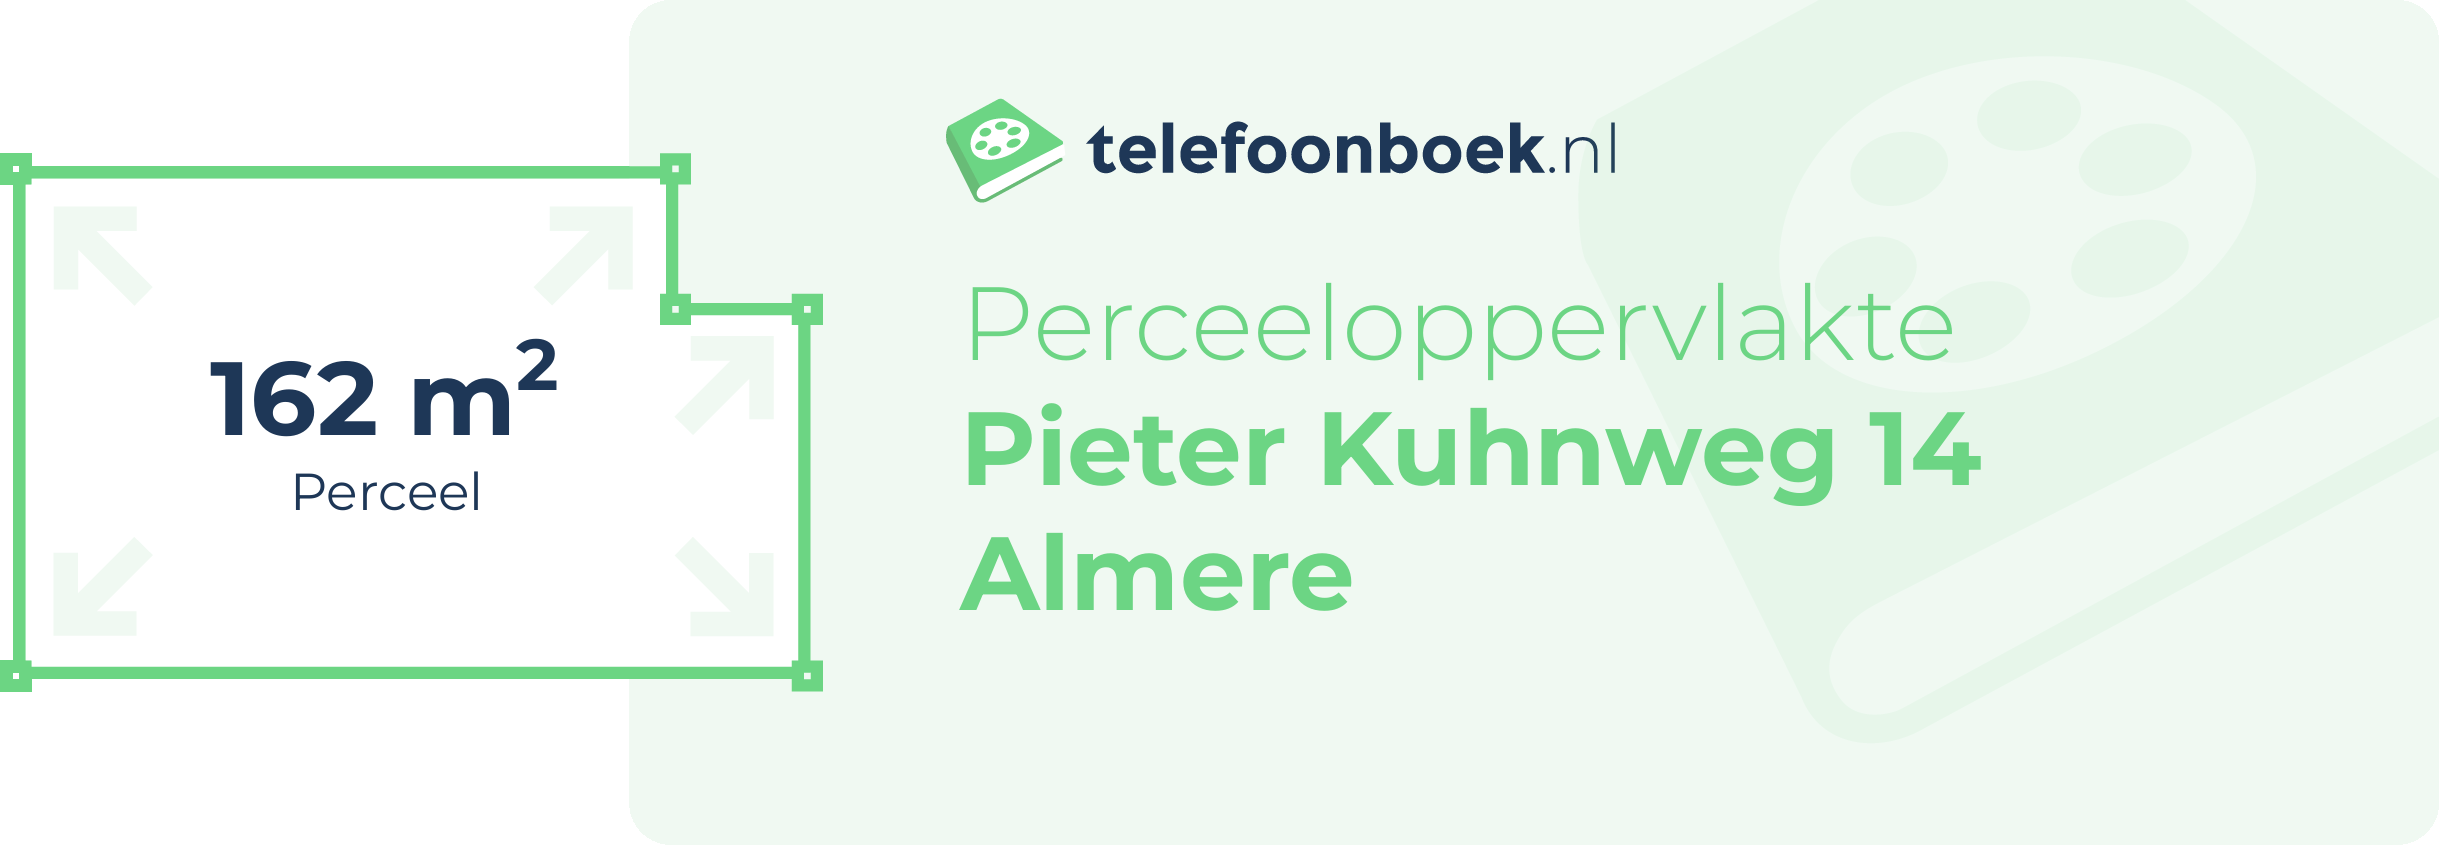 Perceeloppervlakte Pieter Kuhnweg 14 Almere